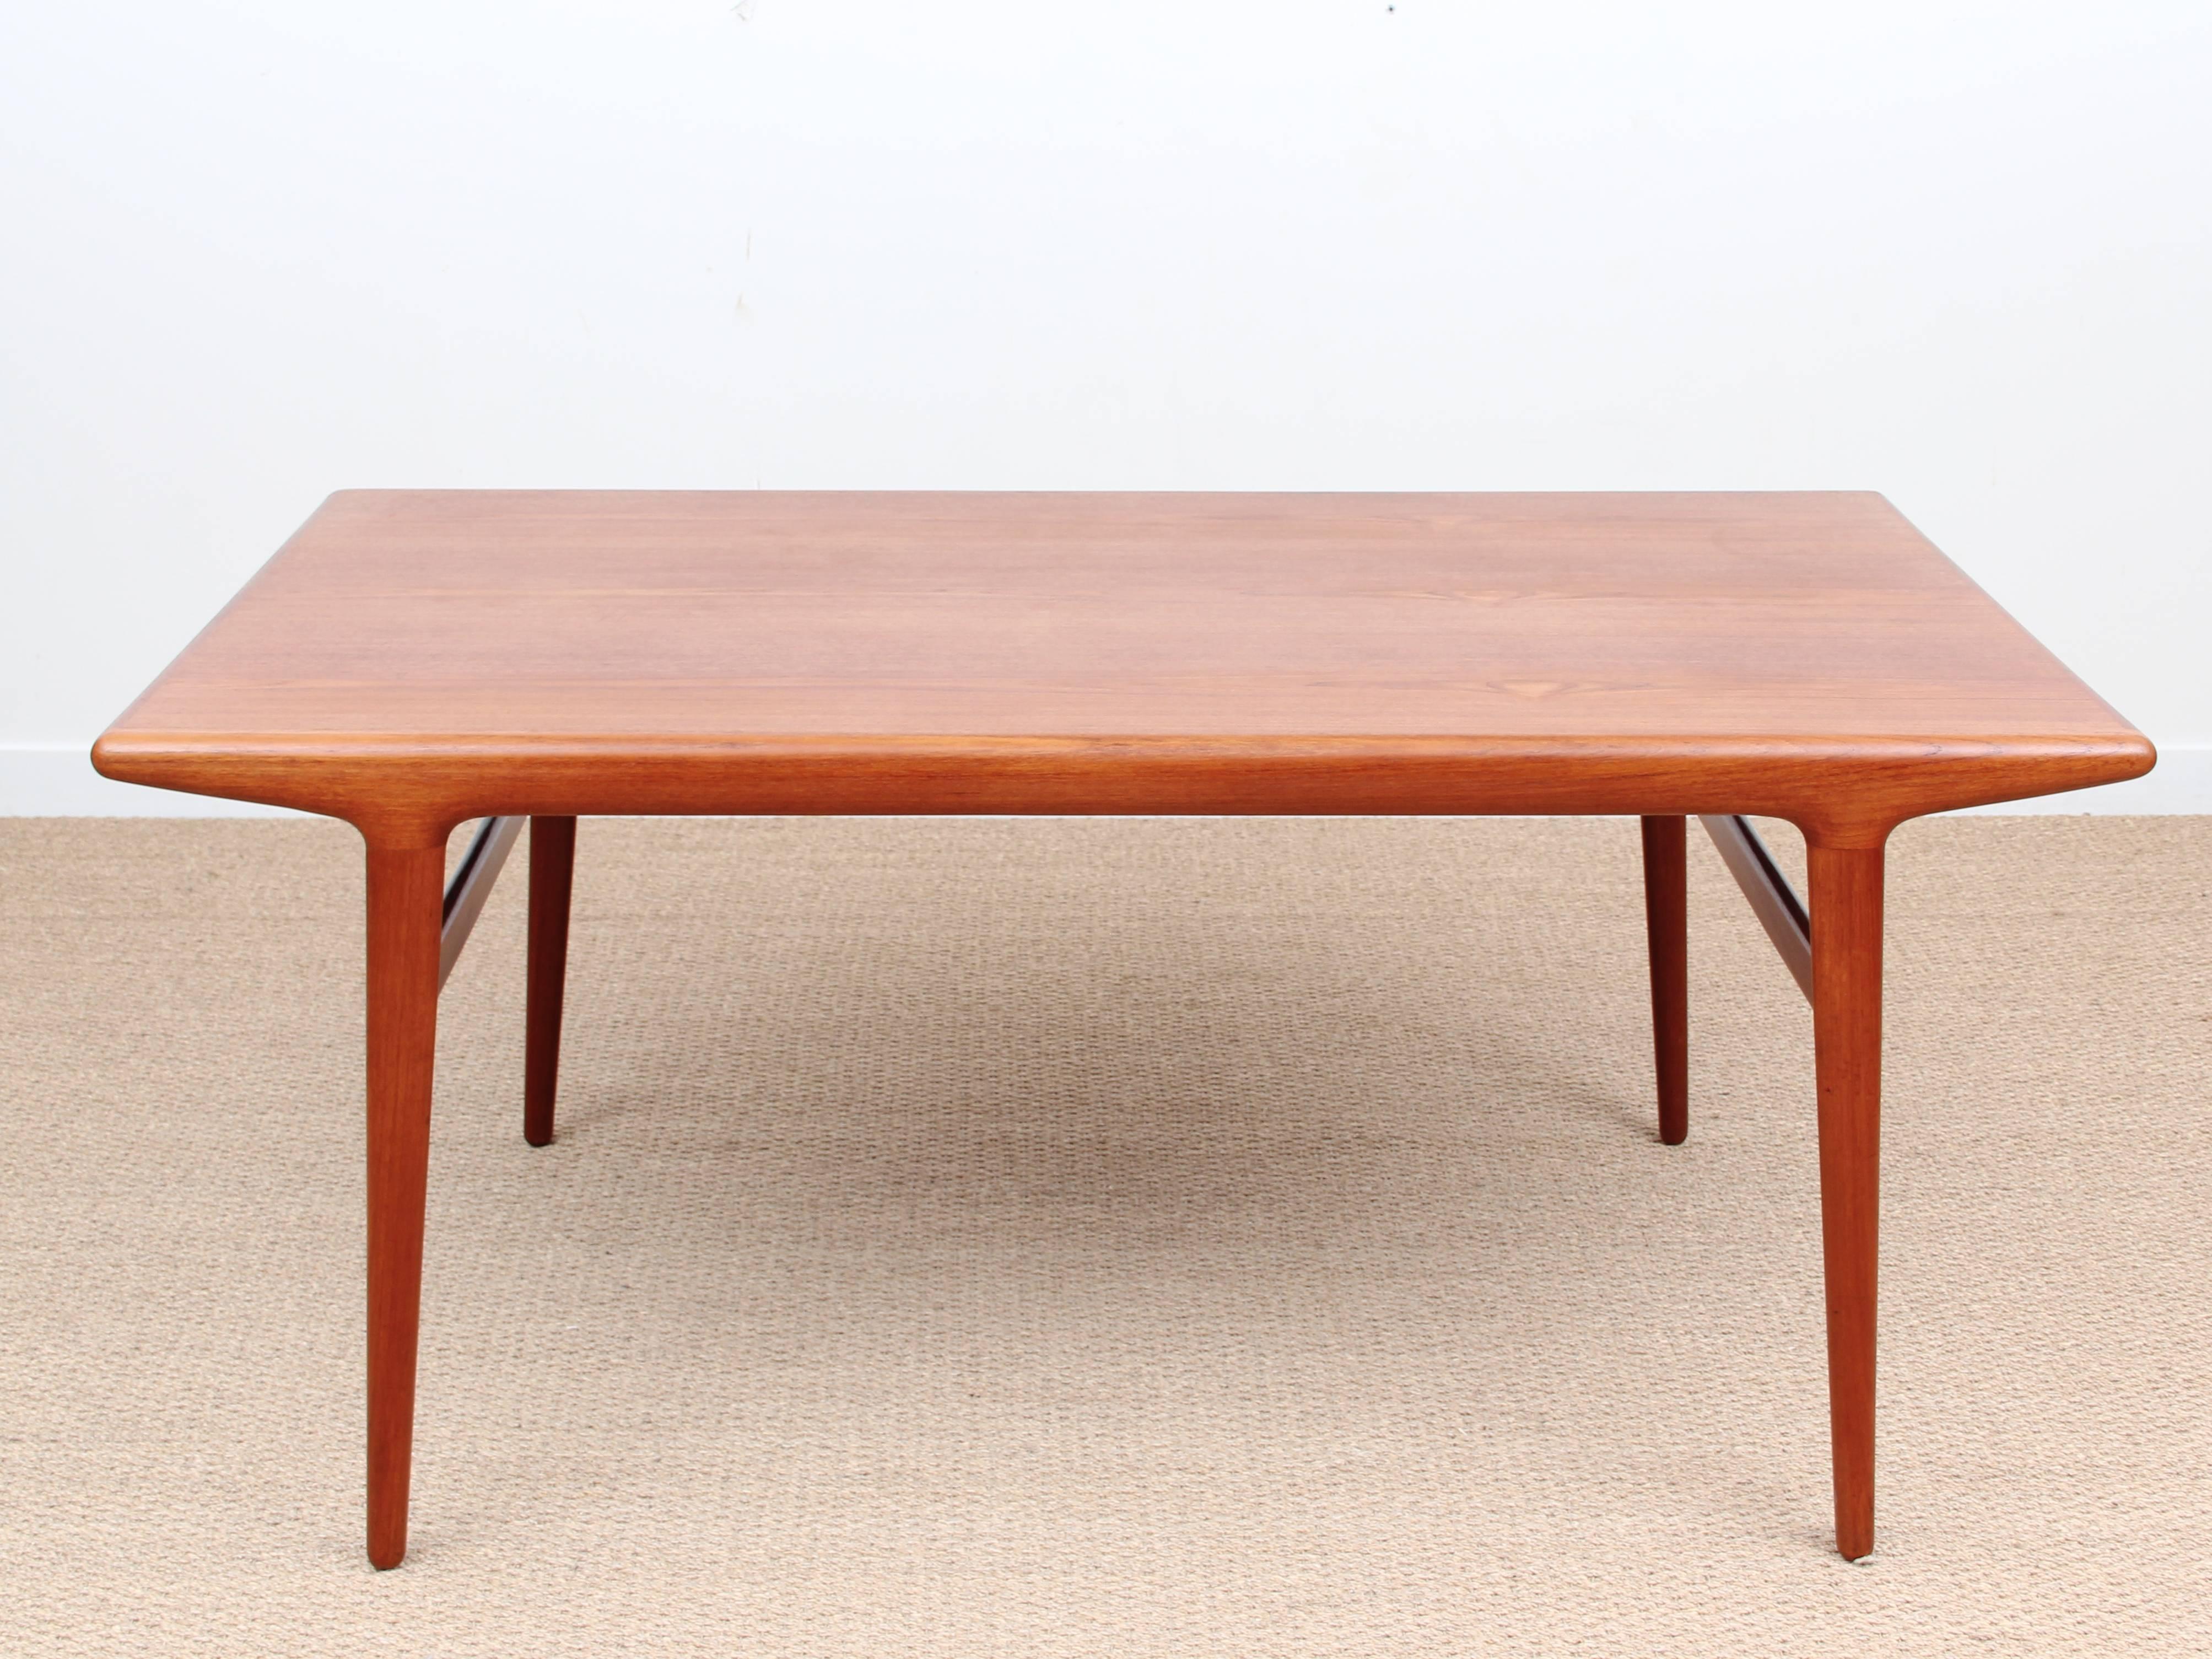 Mid-Century Modern dining table in teak by Niels Møller 6/10 seats. Two extra leaves. Measures:
Width 160/230 cm.